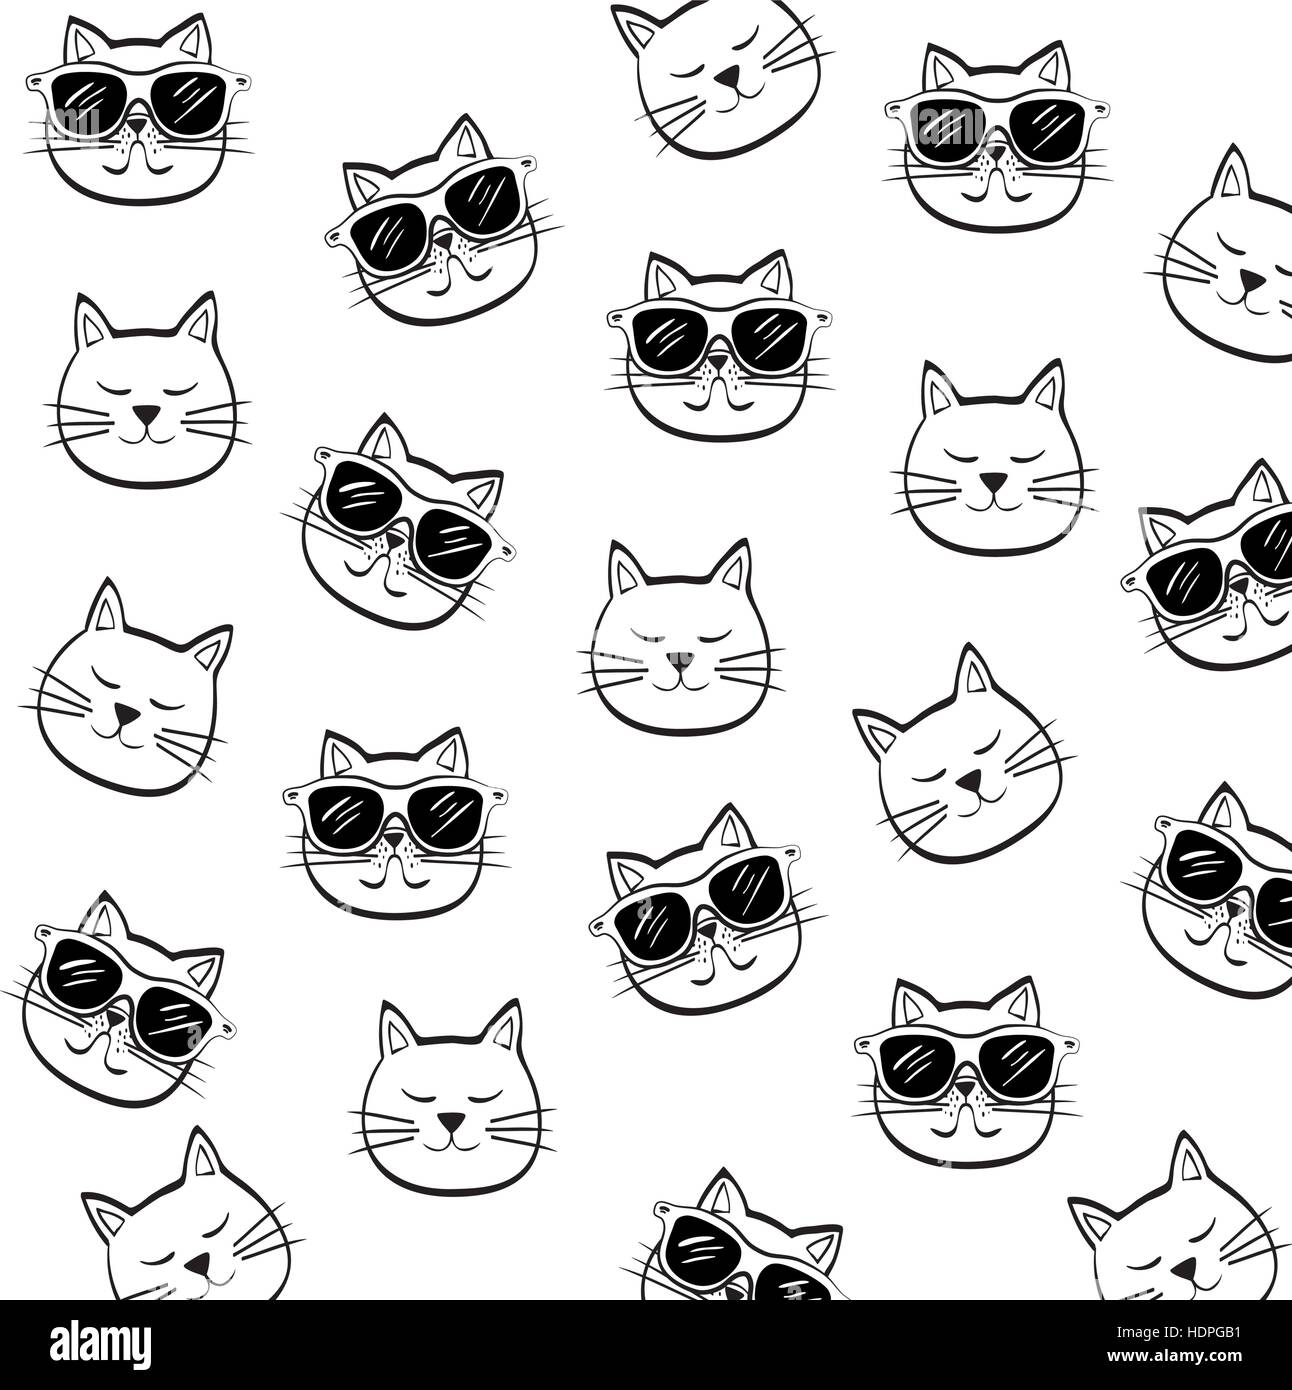 Cat Cartoon Black and White Stock Photos & Images - Alamy